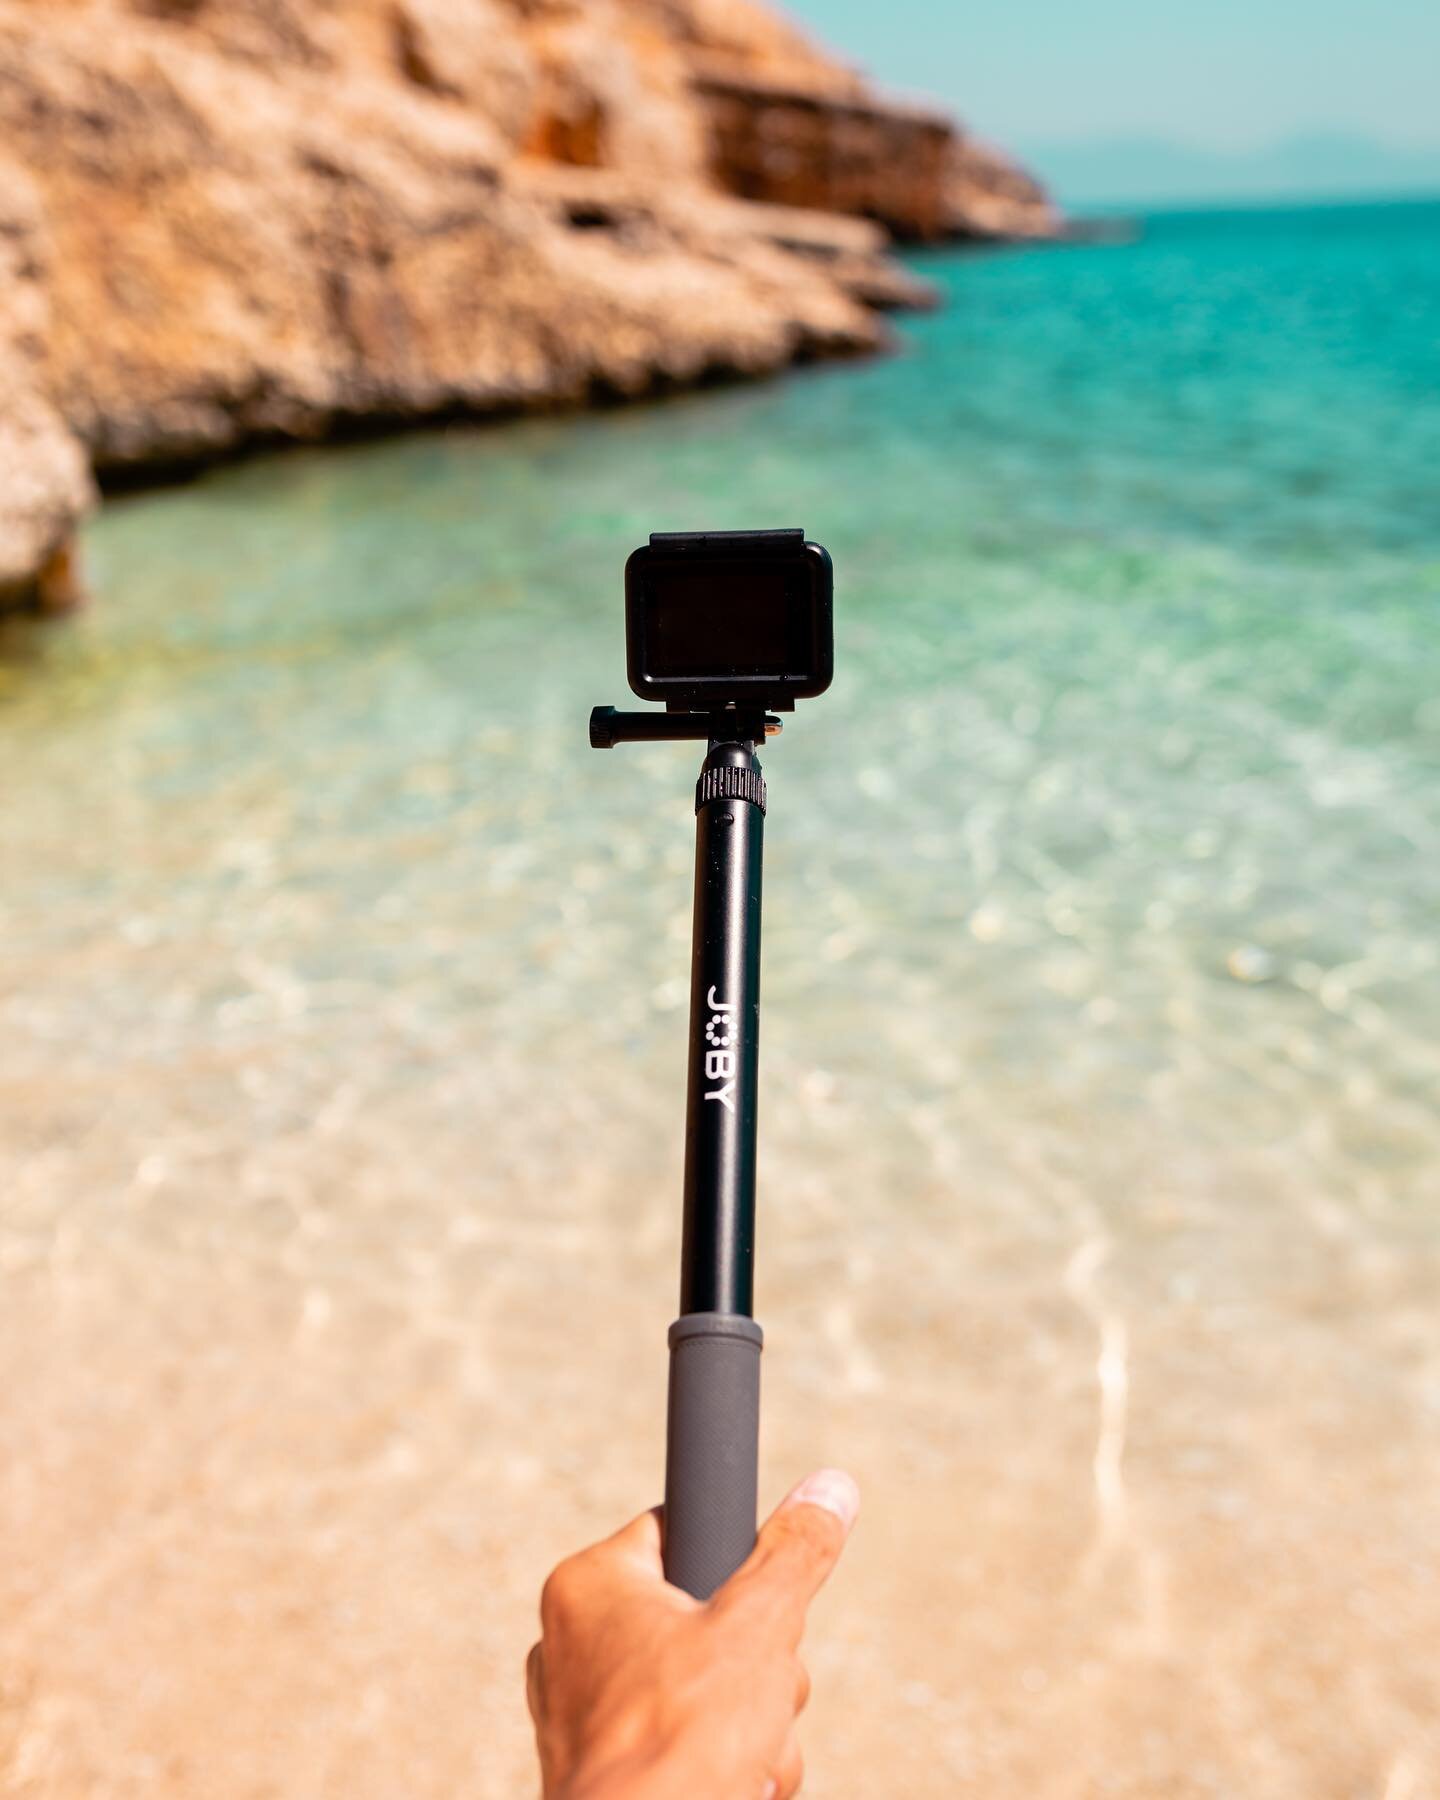 @joby TelePod just made my GoPro fun to use again 😍
.
#telepod #gopro #joby #jobyinc #beach #hiddenbeach #turkey #antalya #marmaris #paradise #cameratech #gopro7 #gopro8 #waves #beachlife #beachvibes #beachday #nature #travel#travelgram